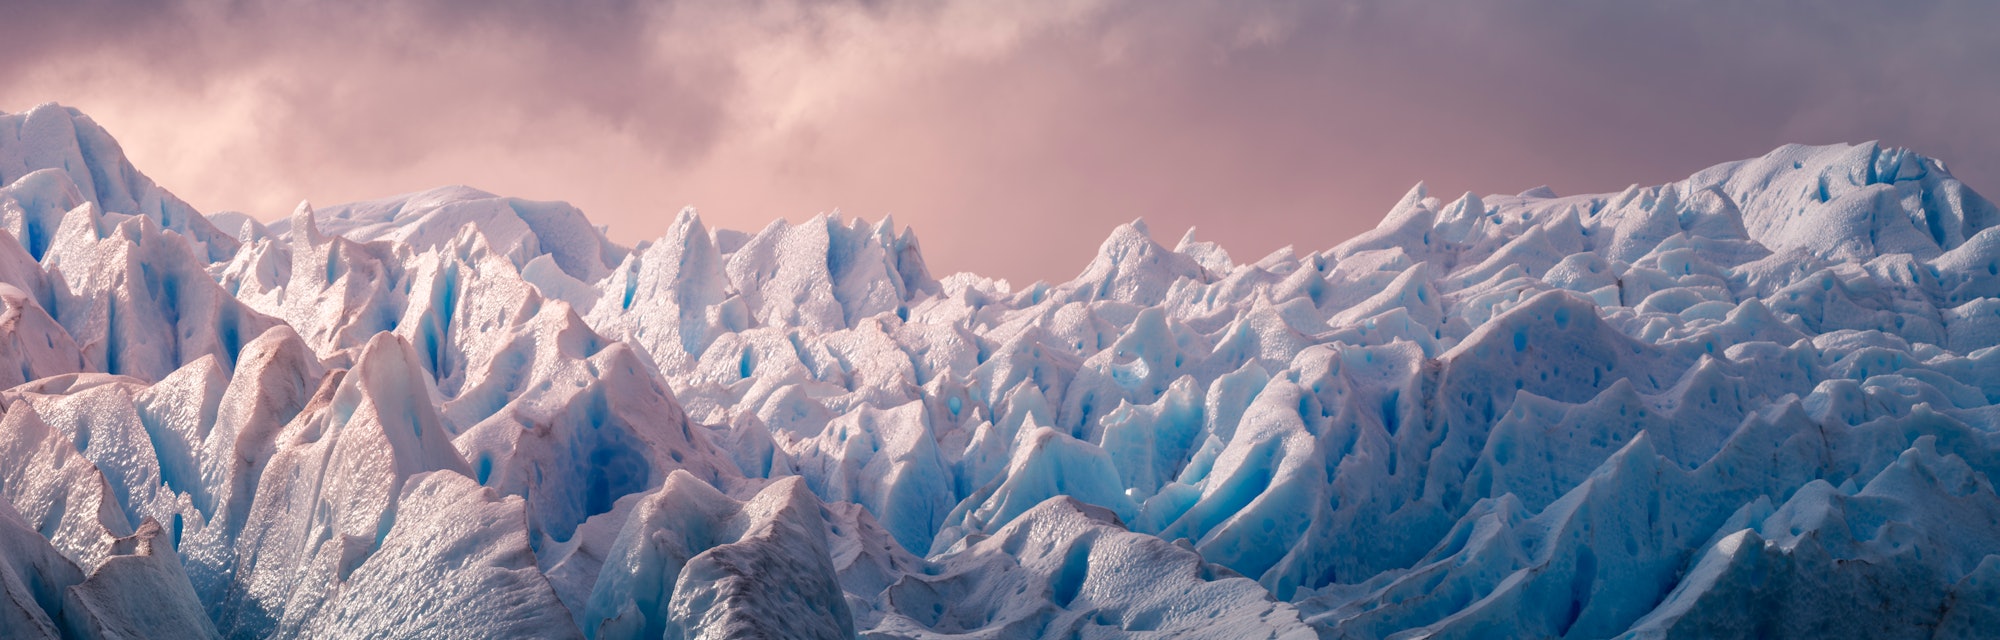 Perito Moreno glacier, Patagonia Argentina